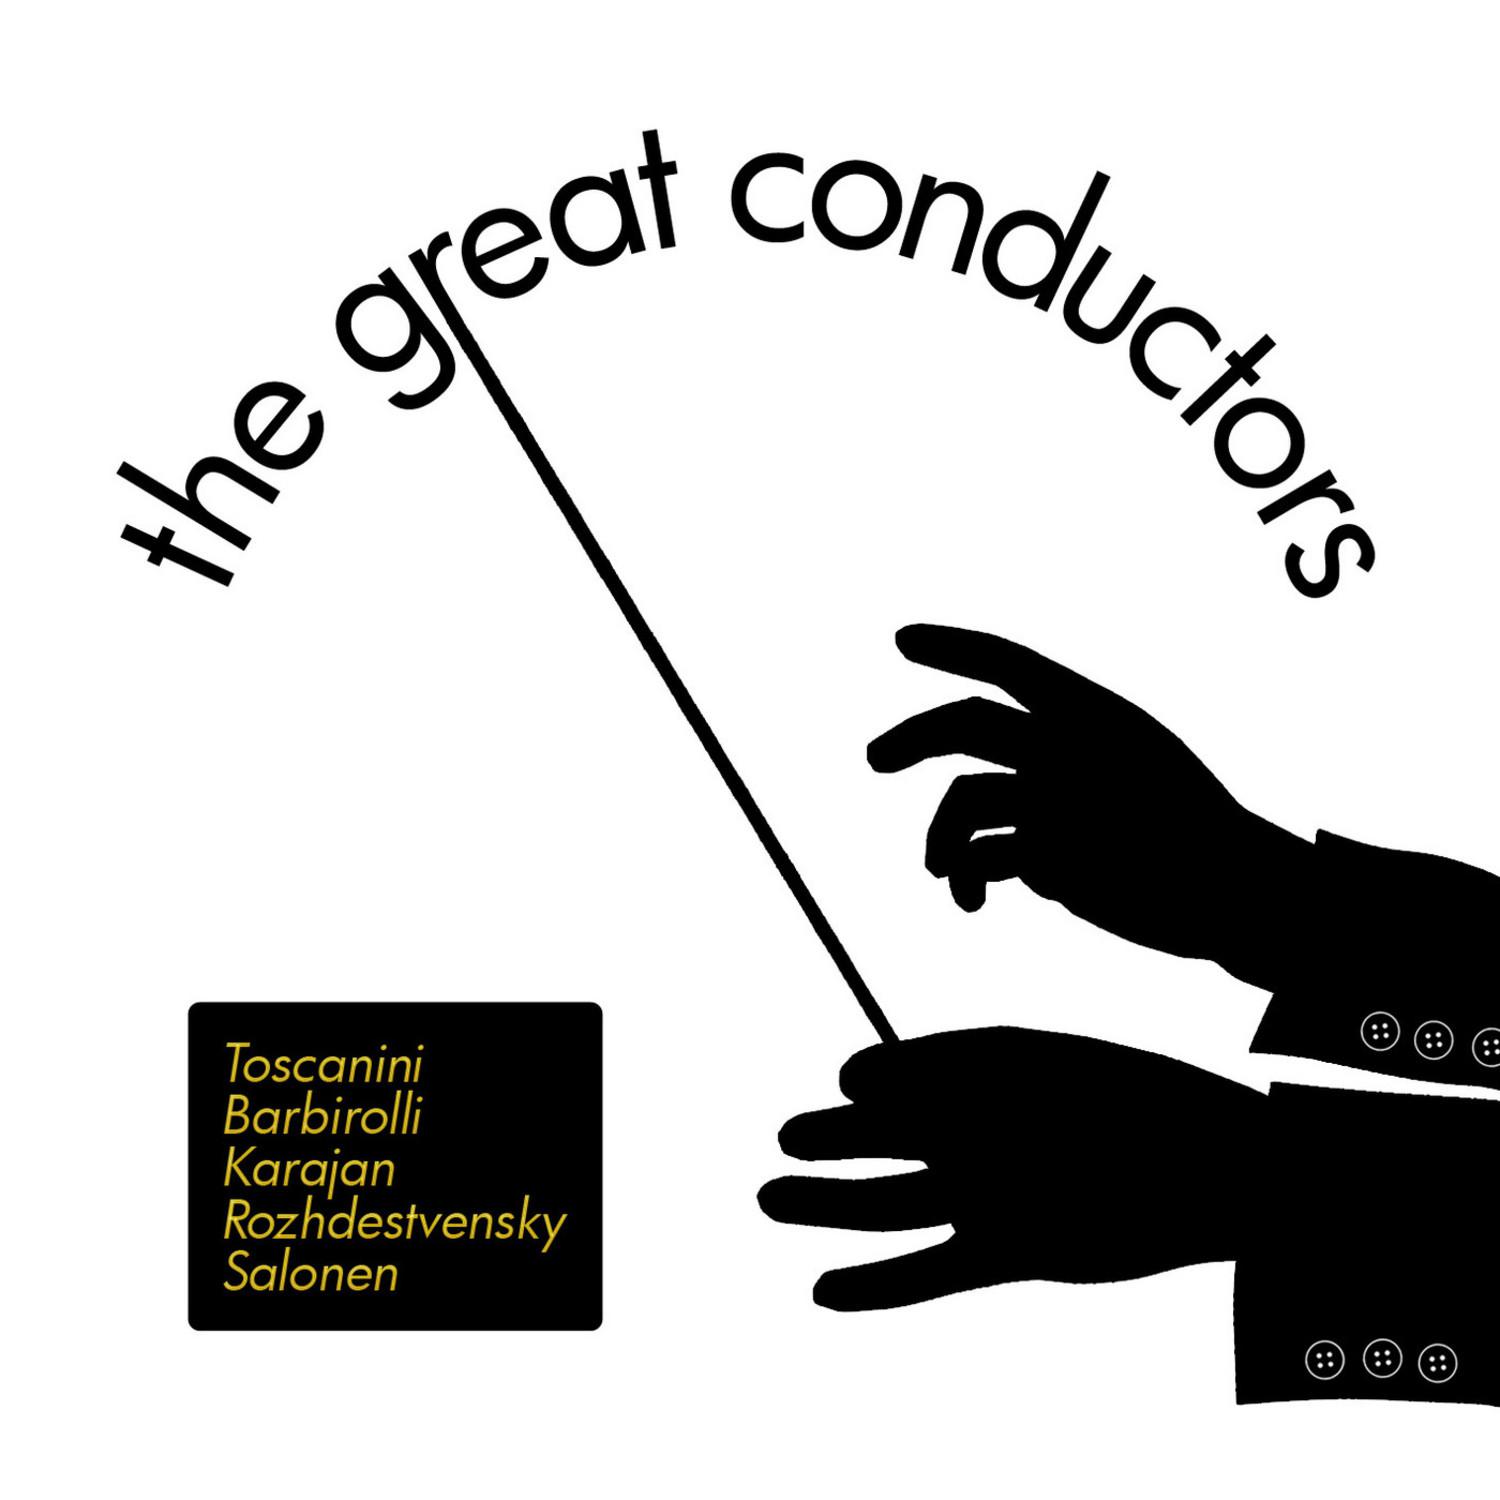 The Great Conductors: Toscanini, Barbirolli, Karajan, Rozhdestvensky and Salonen